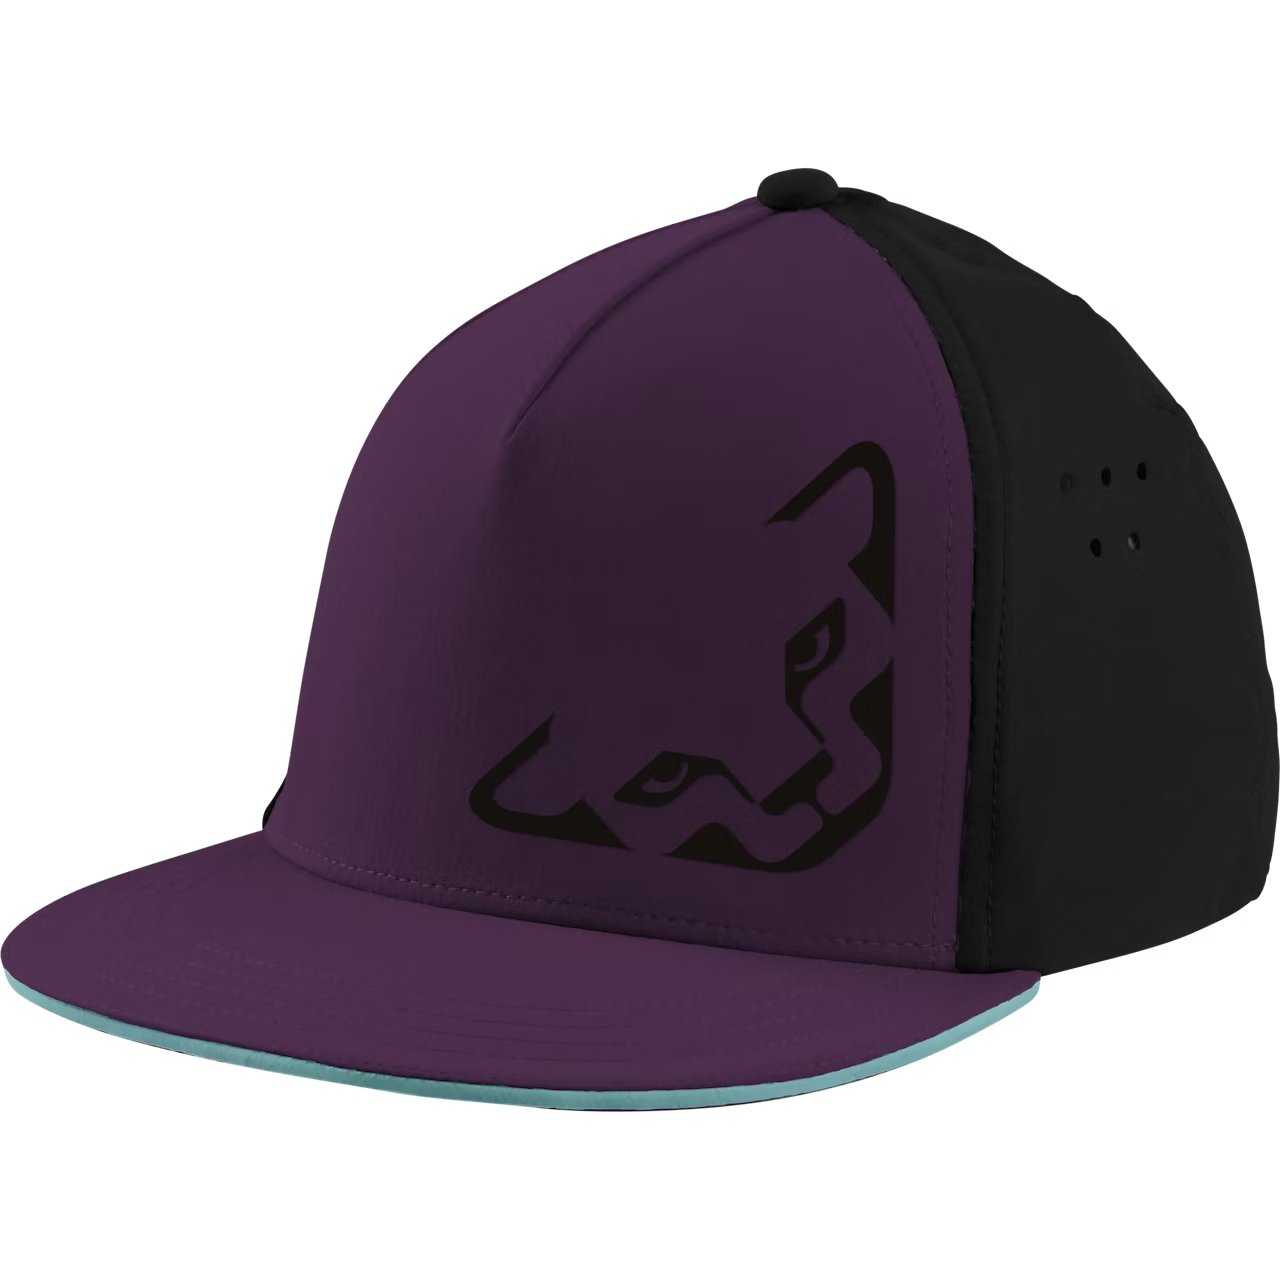 šiltovka DYNAFIT Tech Trucker cap royal purple